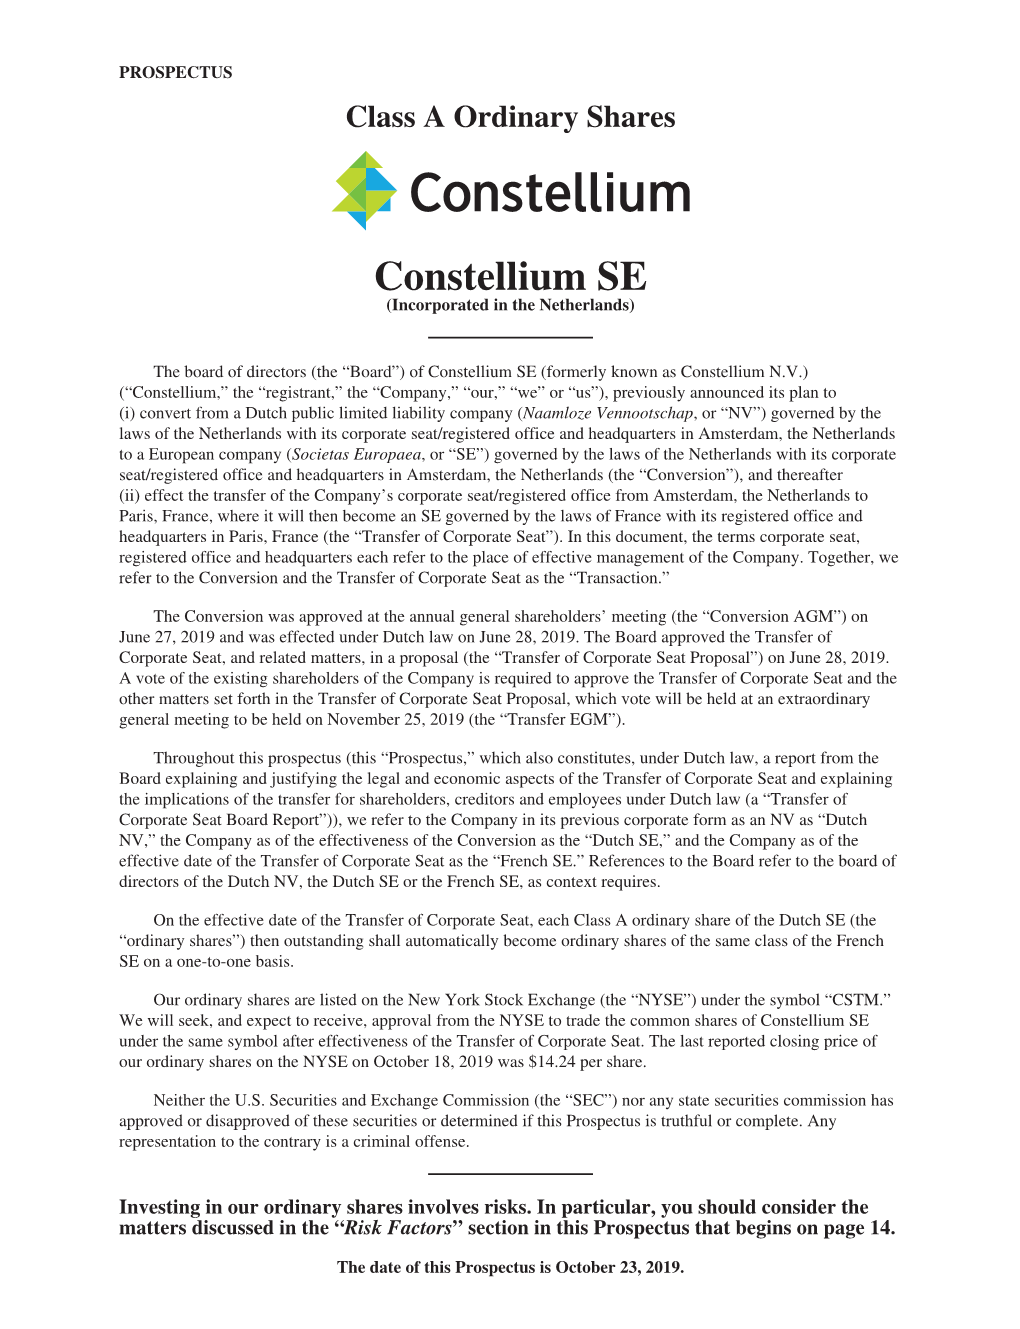 Constellium SE (Incorporated in the Netherlands)